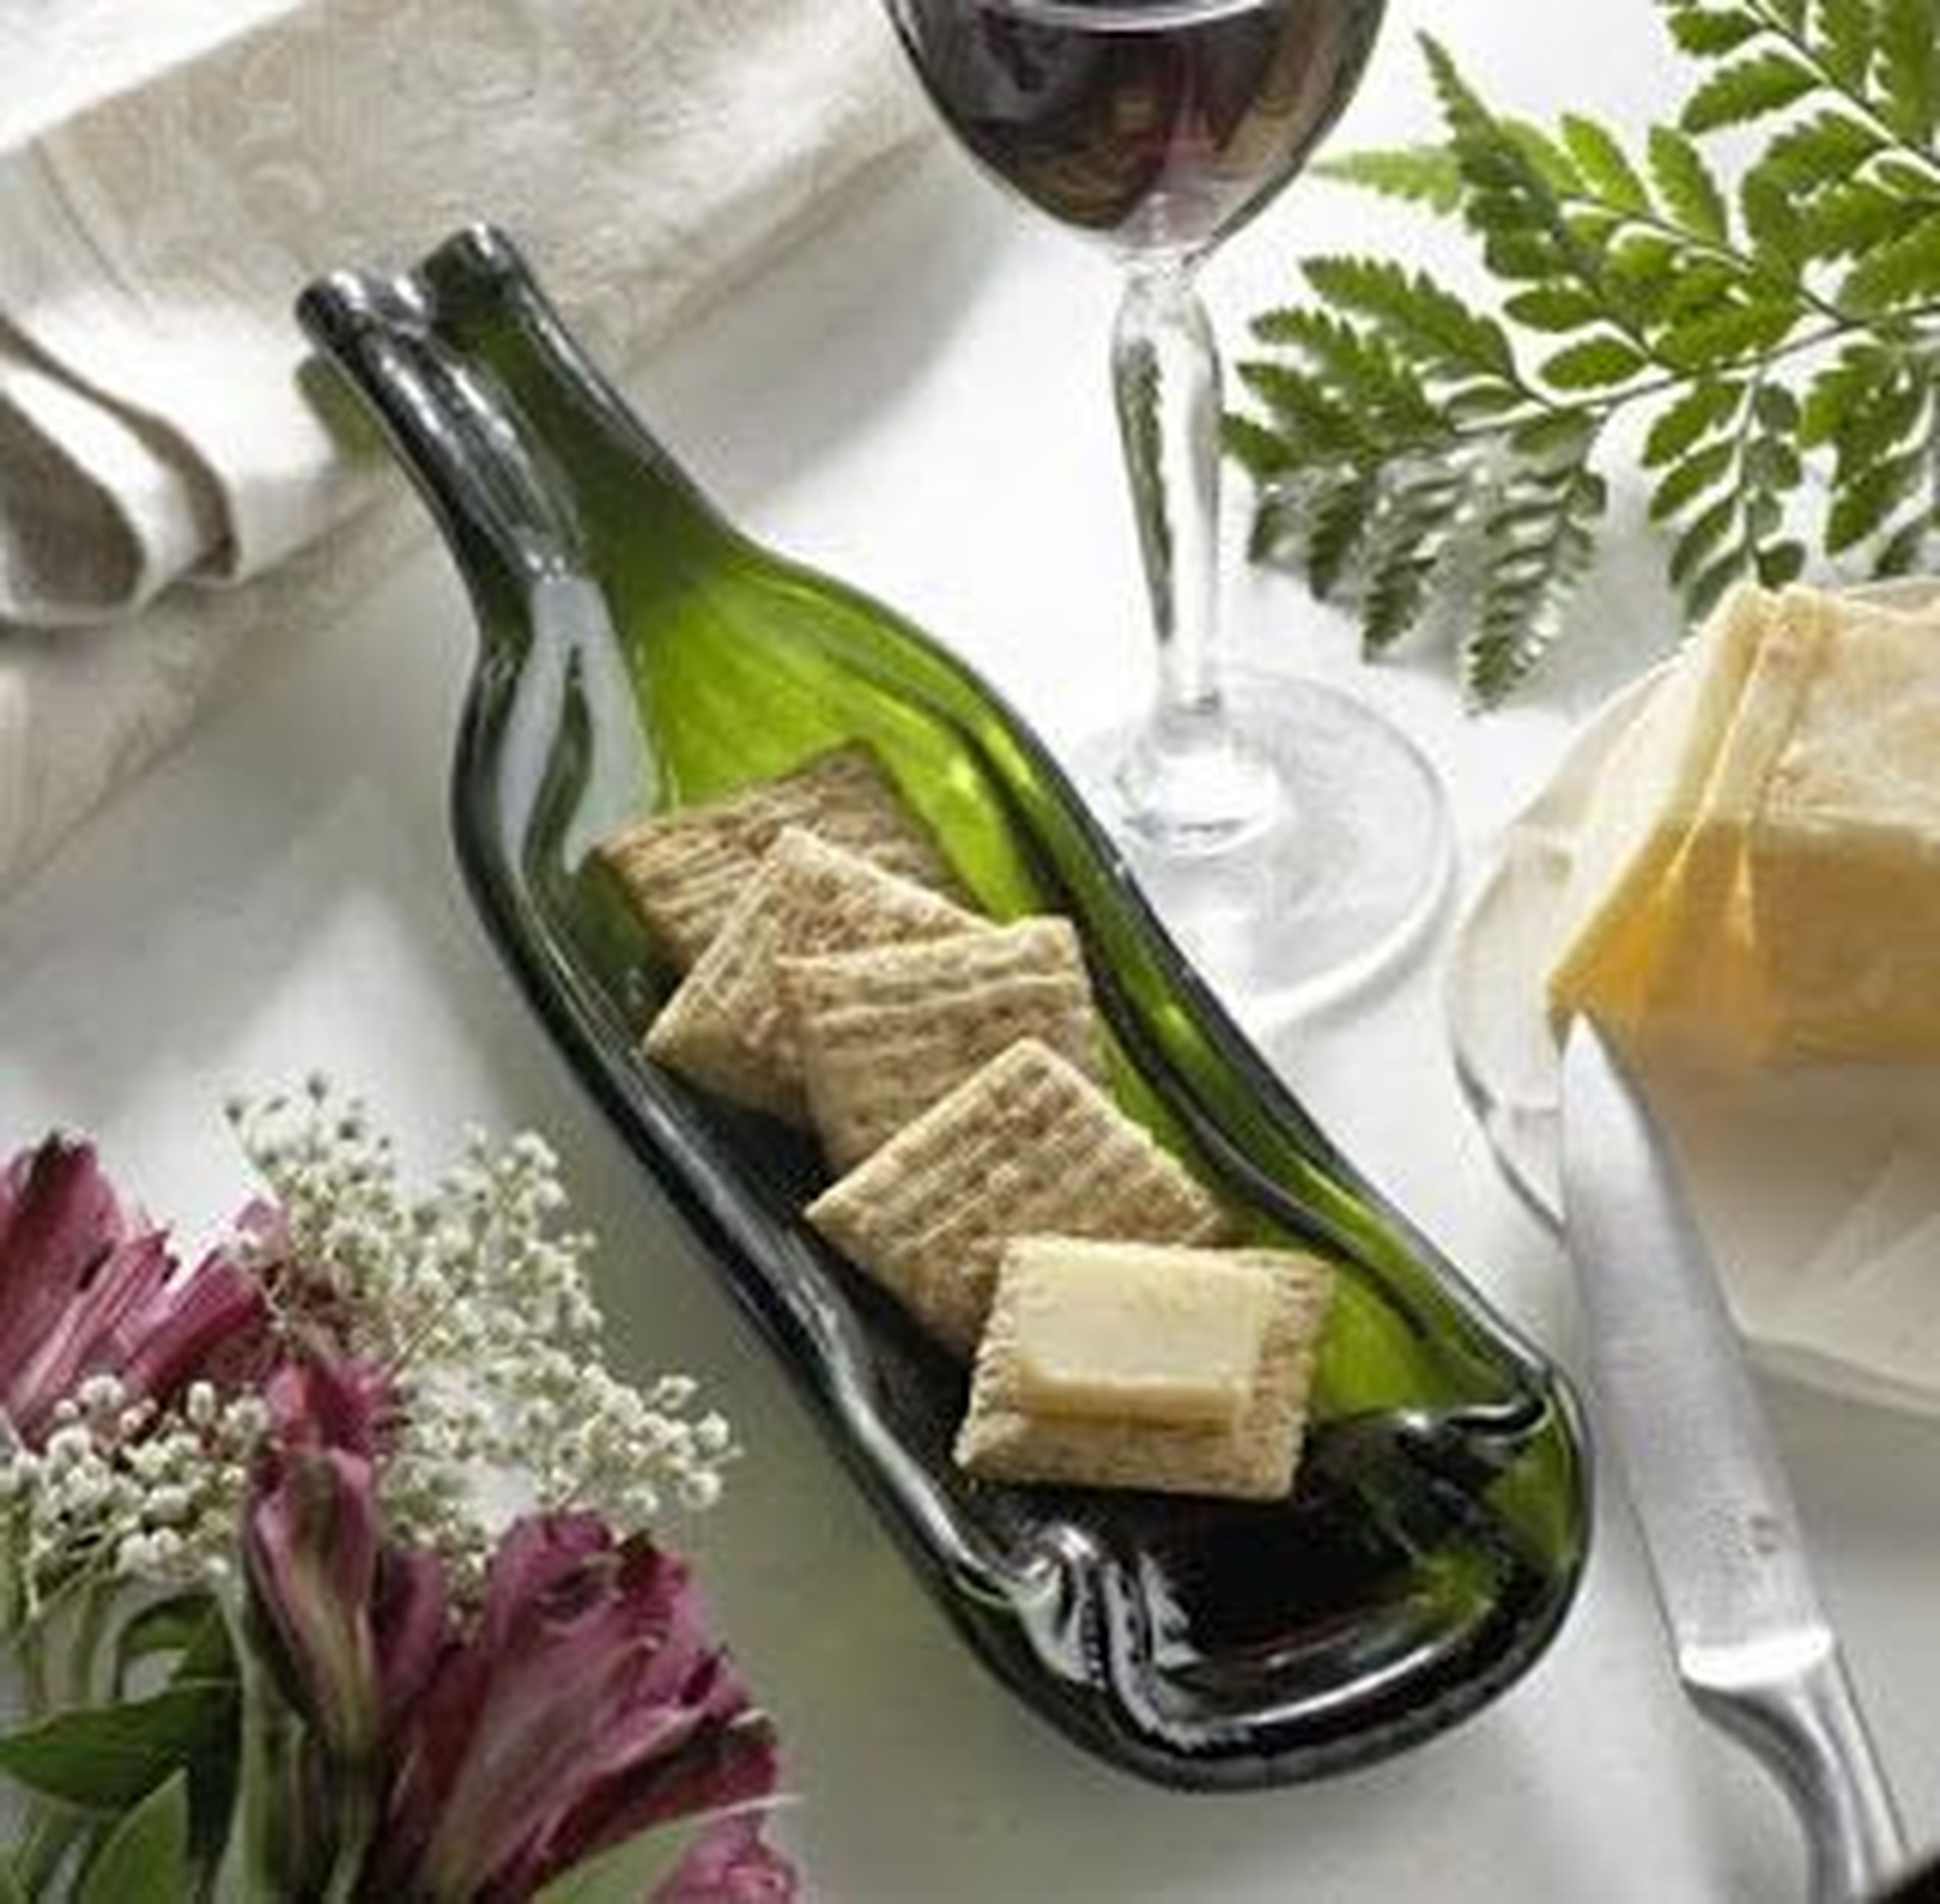 Plato con botella de vino